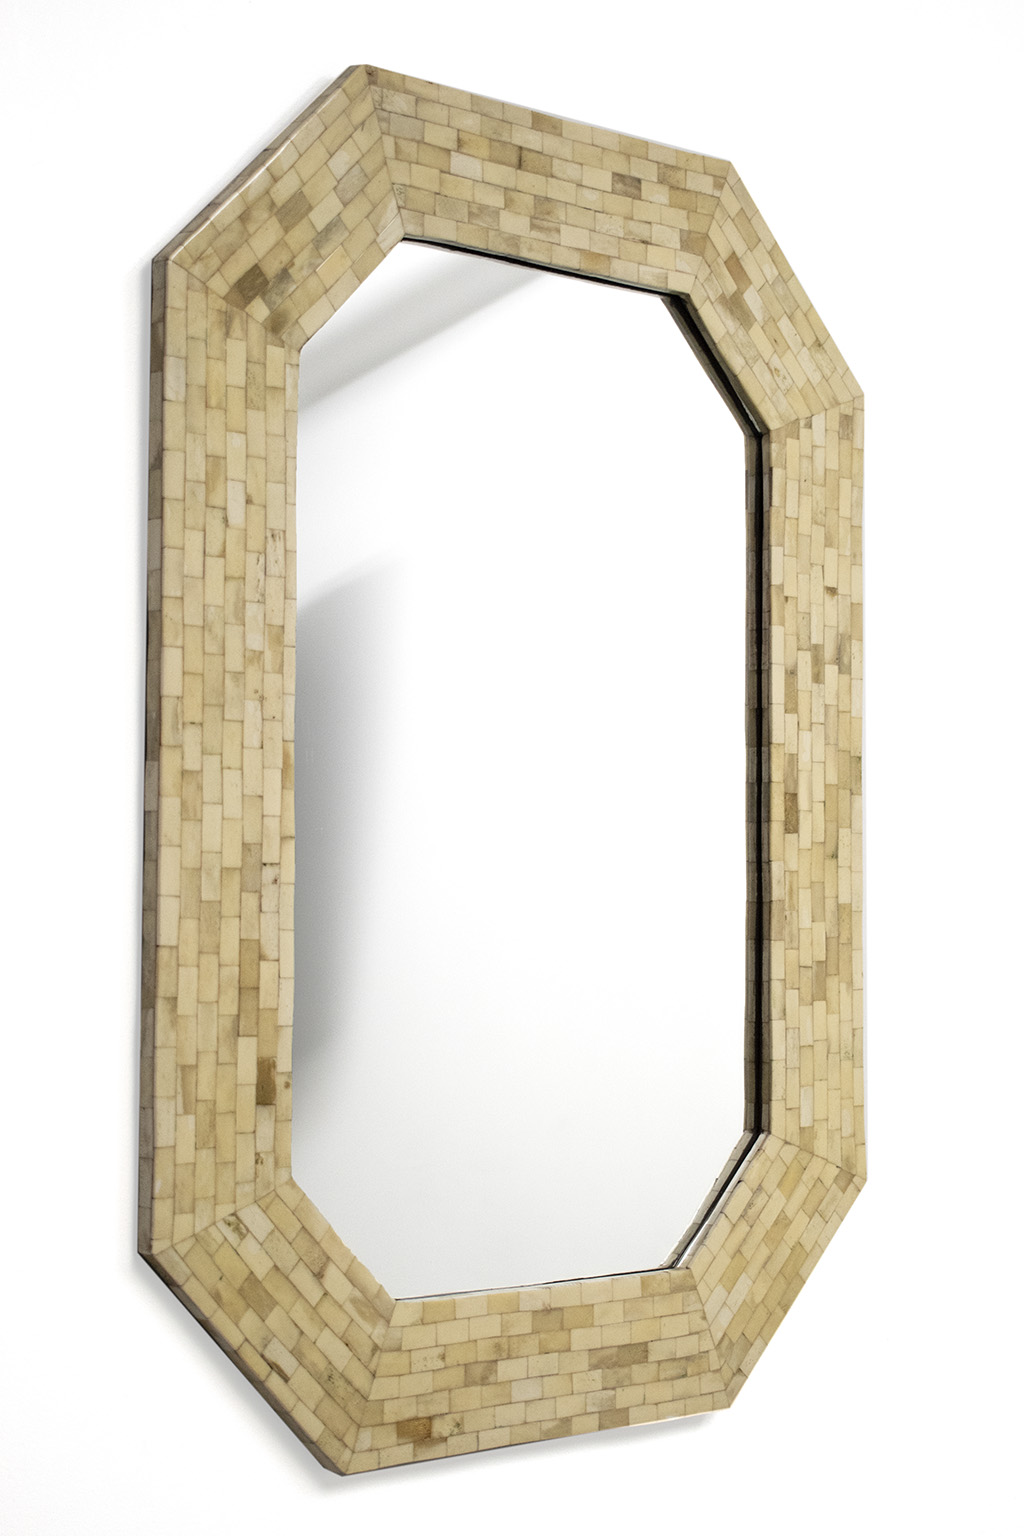 Spiegel in frame van mozaïek stukjes